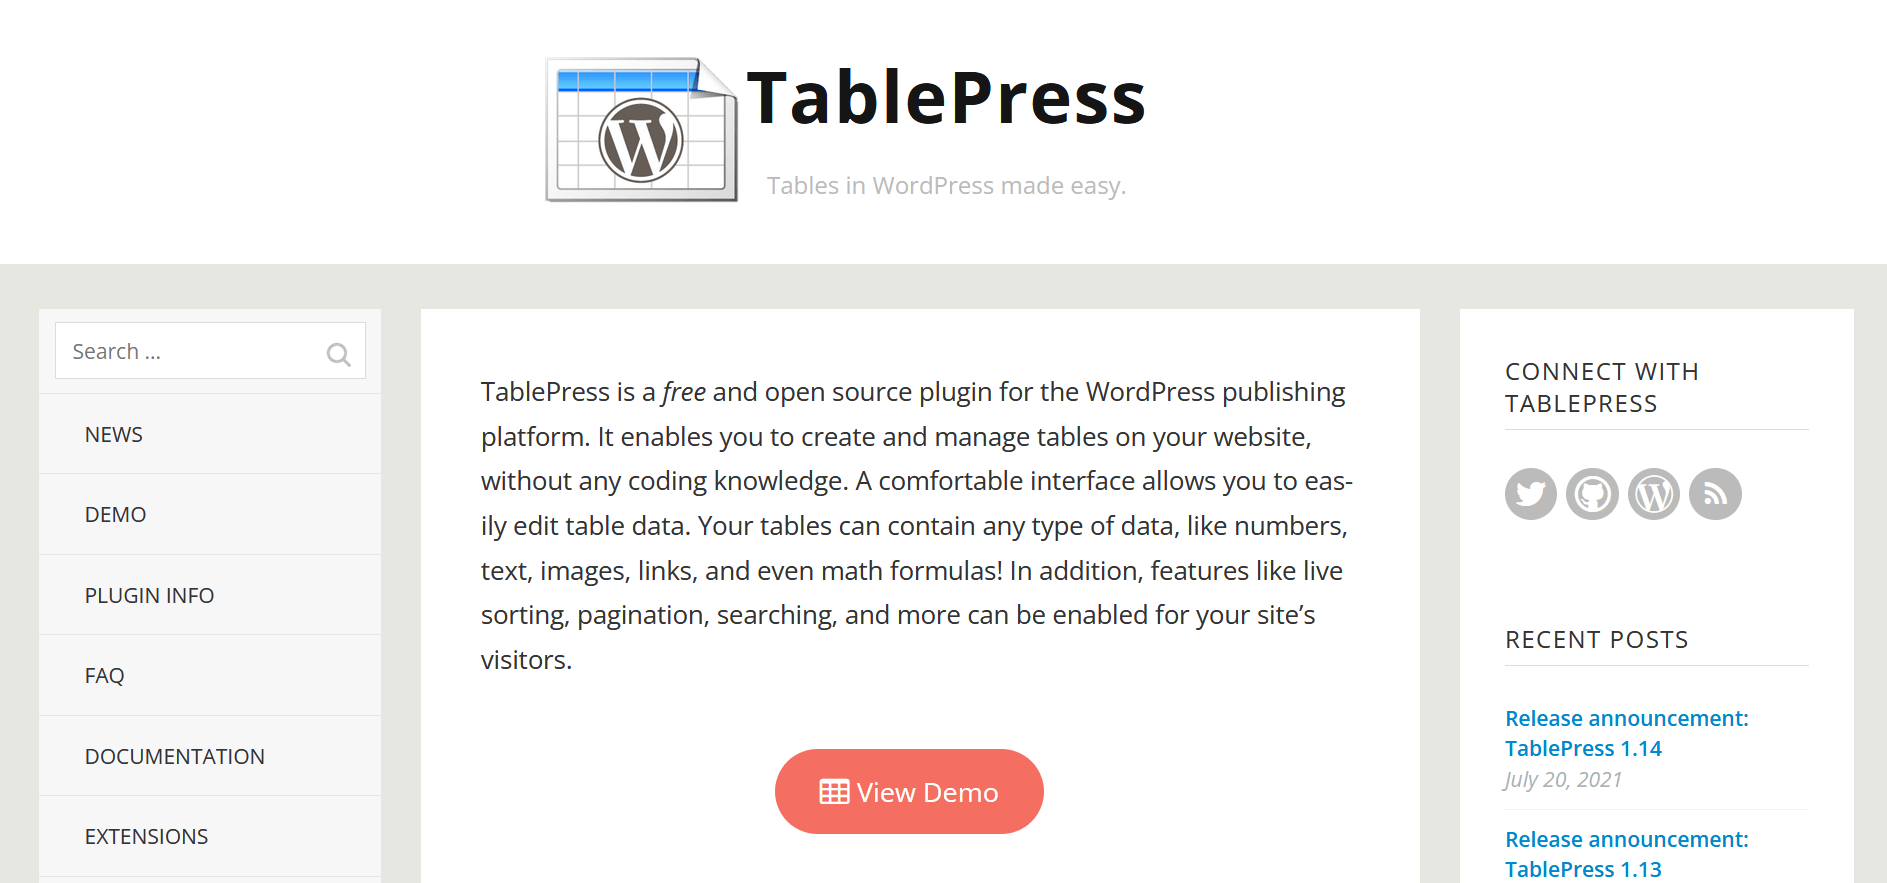 Screenshot of the “TablePress” table plugin website